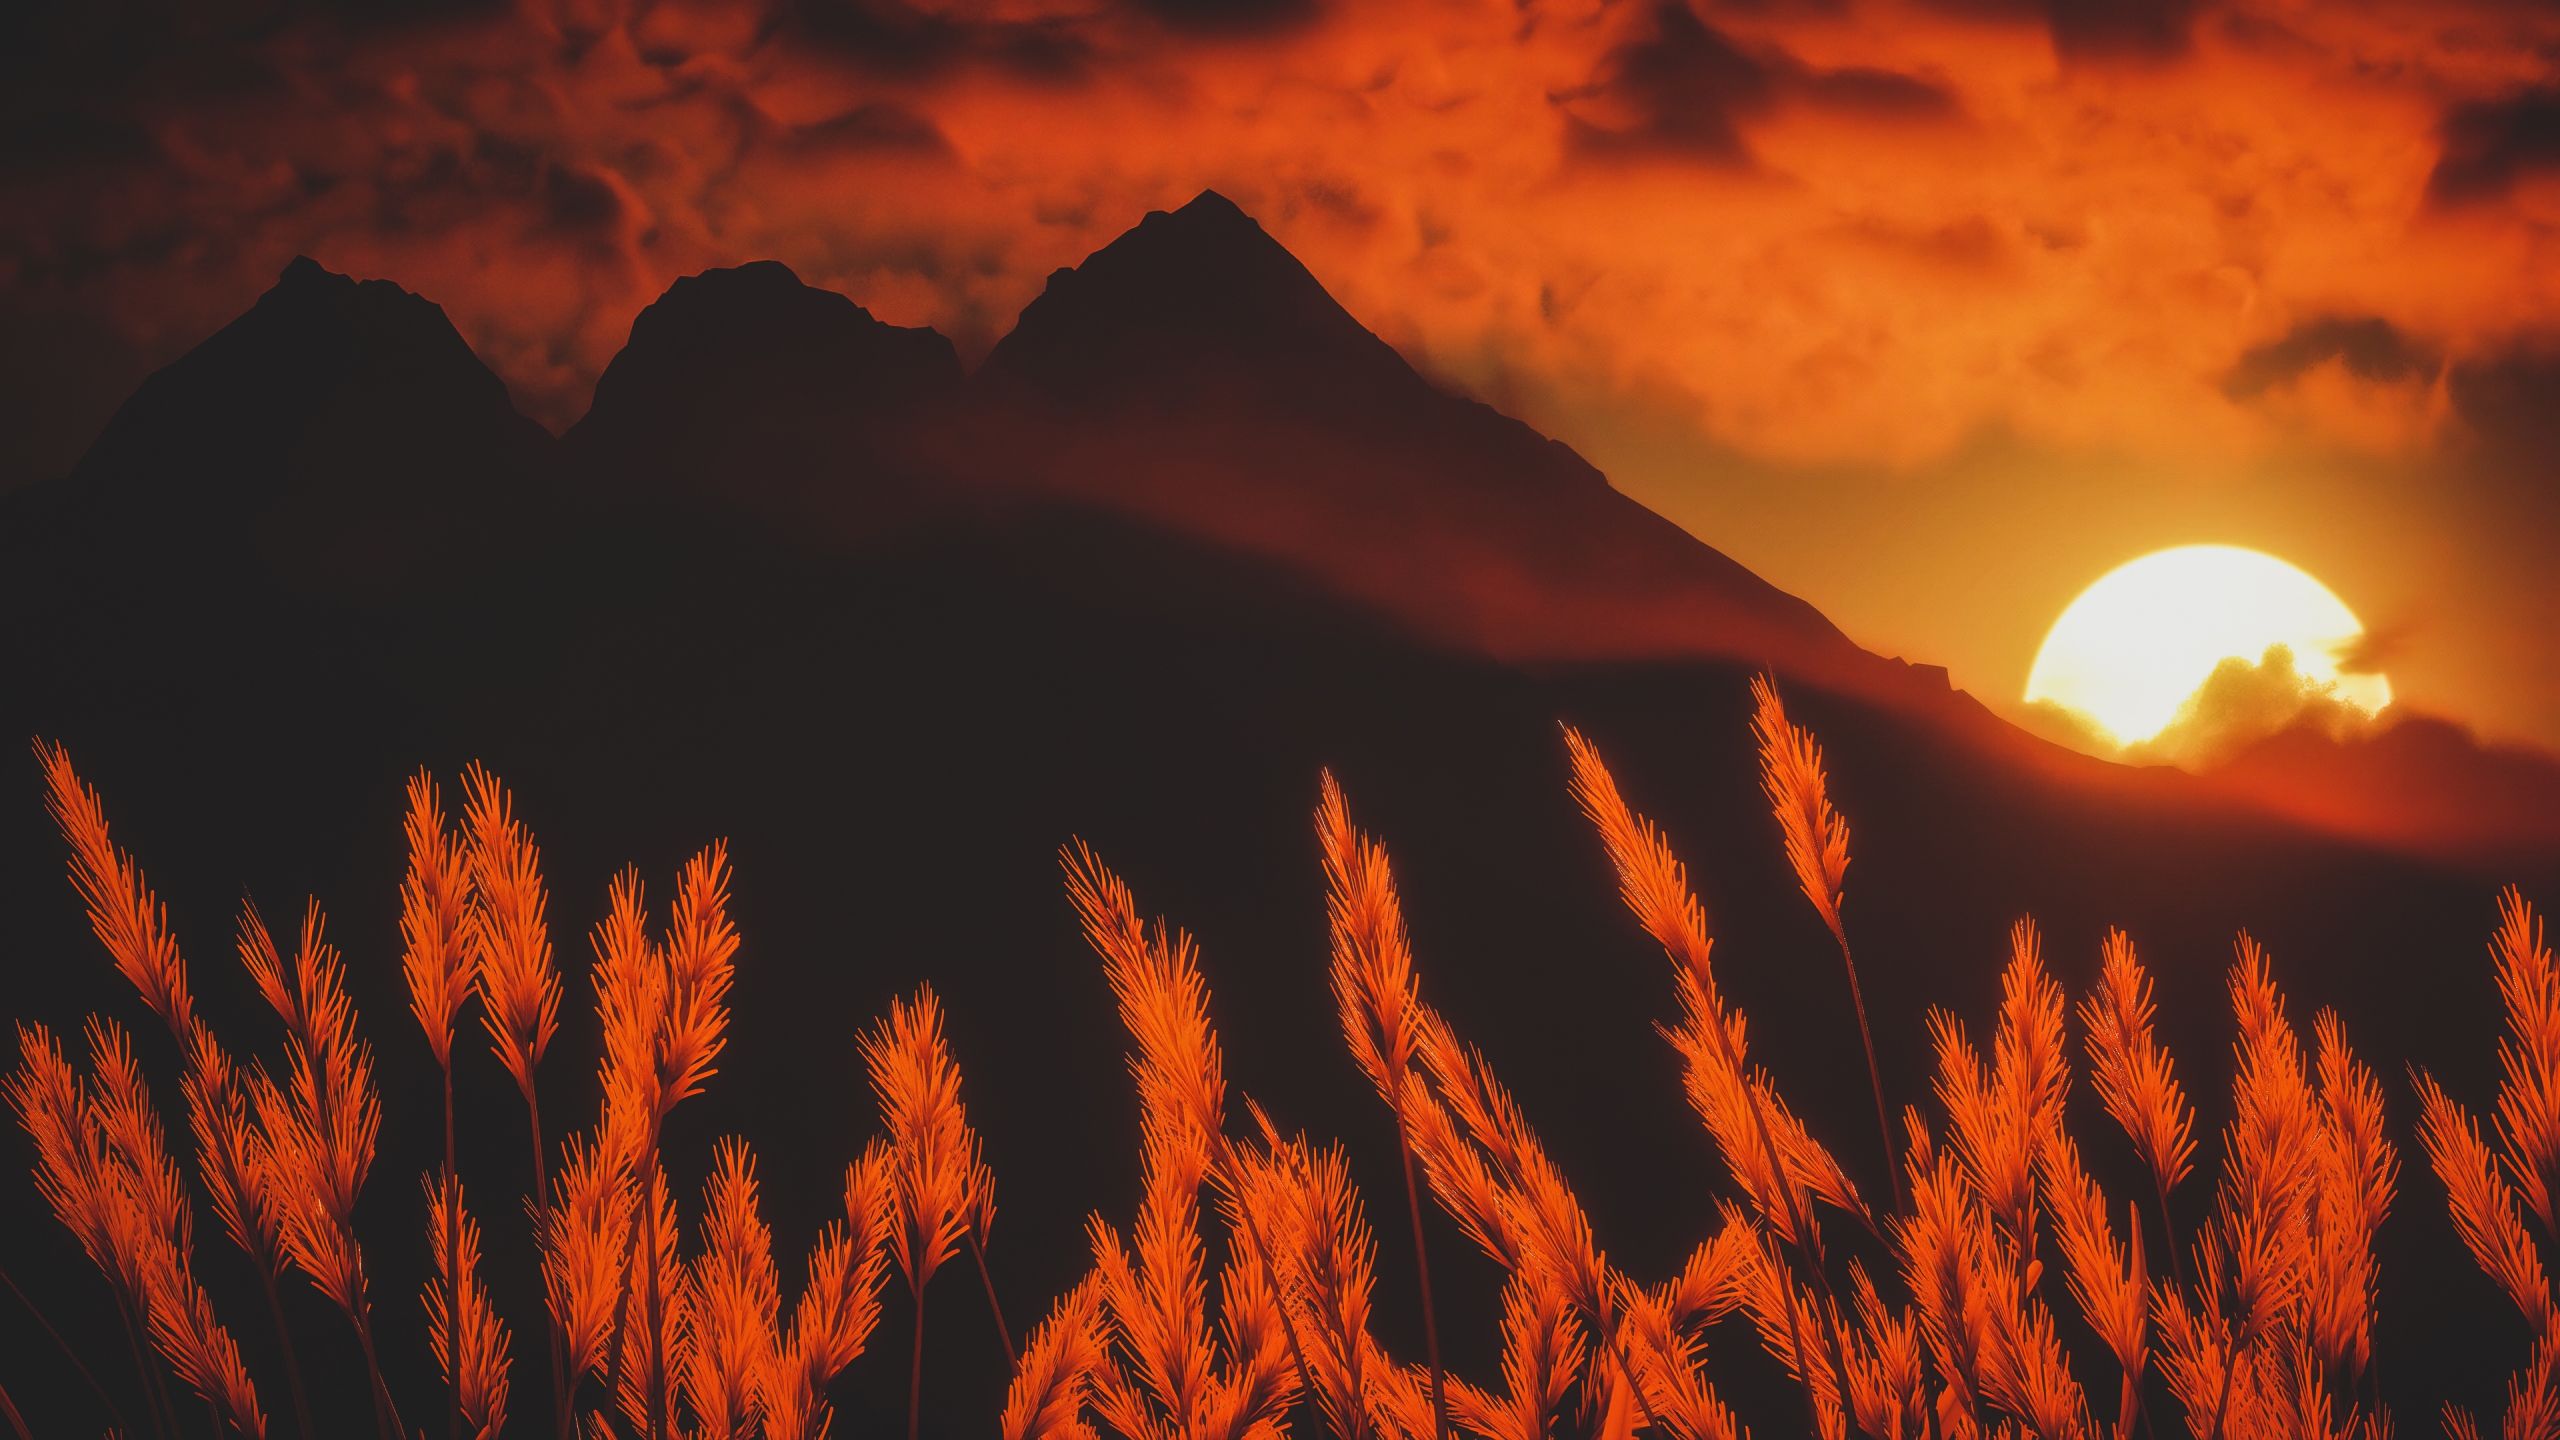 Sawtooth Mountain, the sun, and wheat